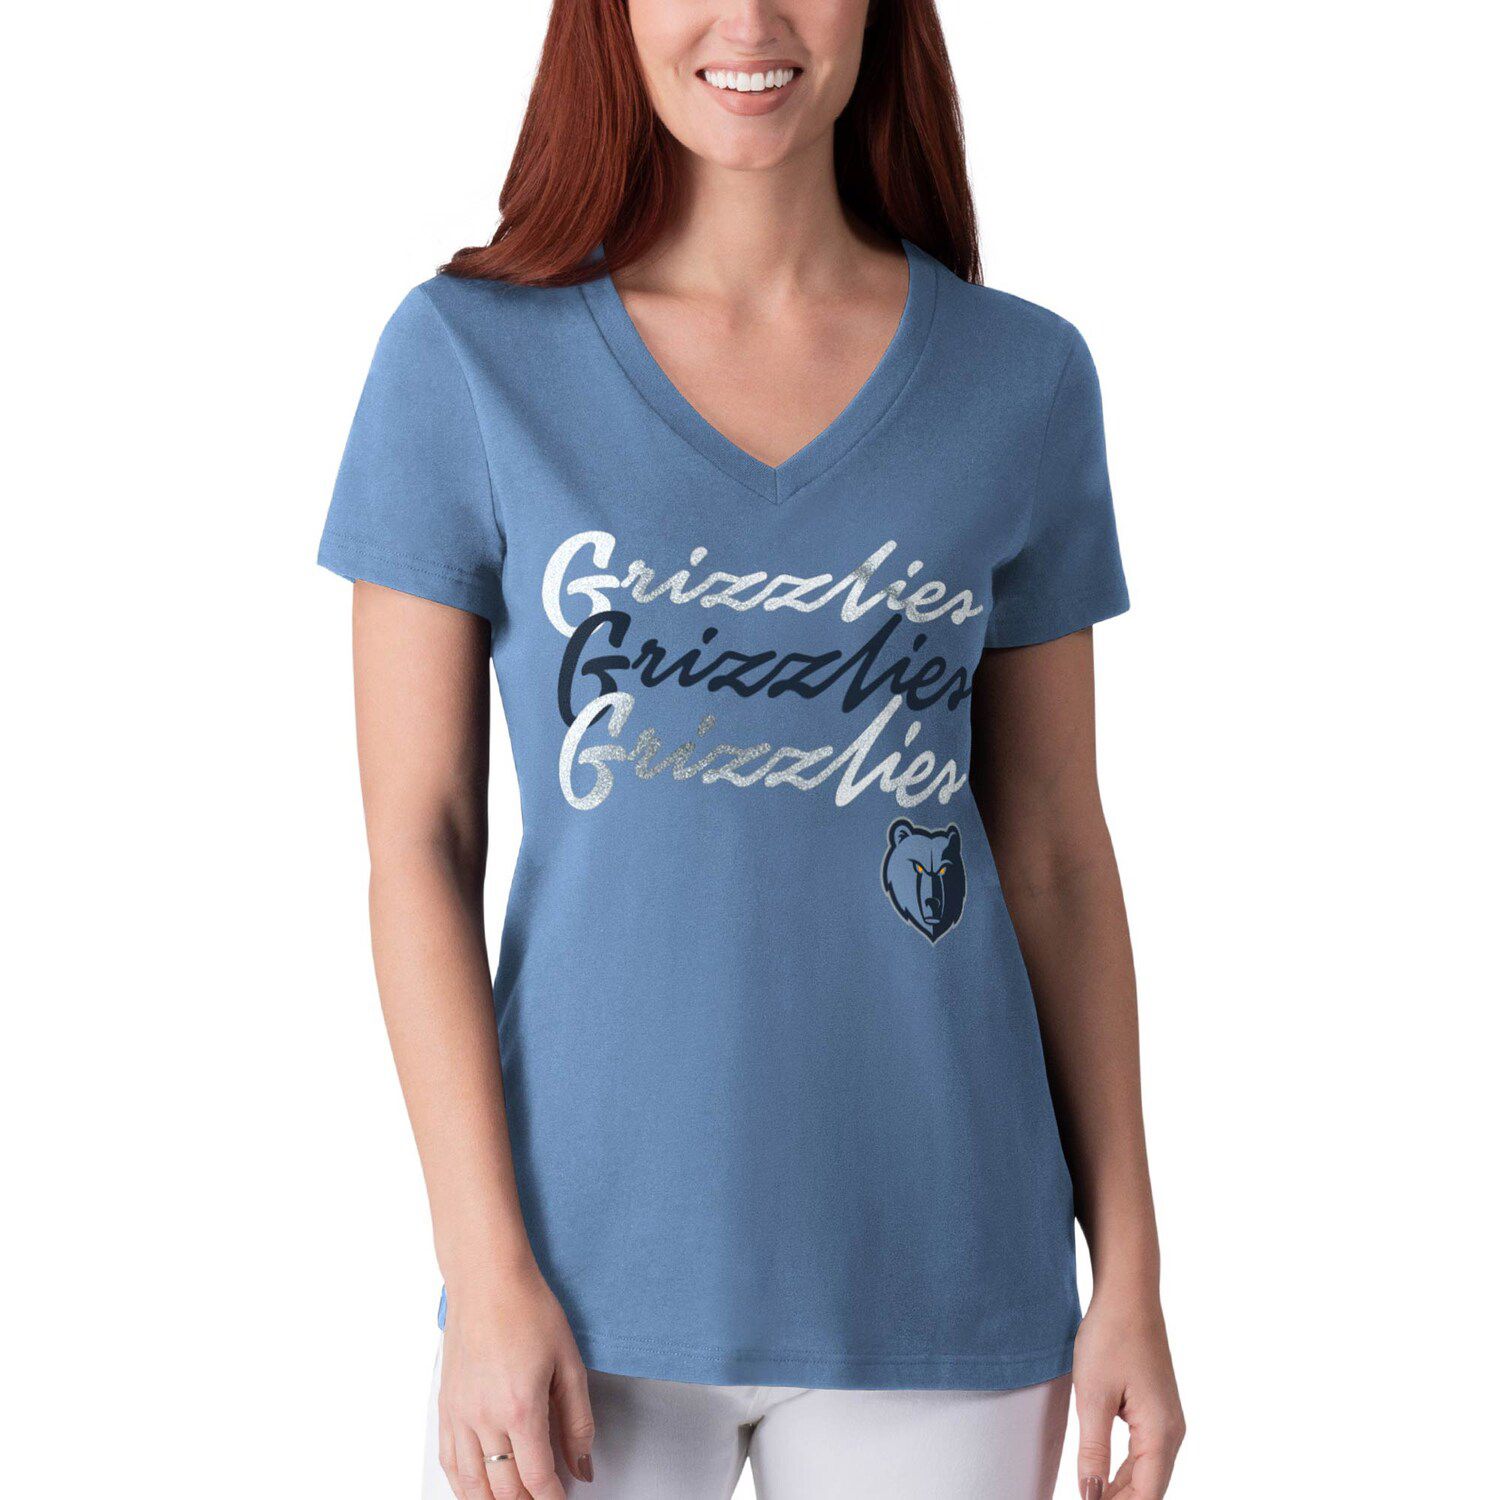 memphis grizzlies women's shirts